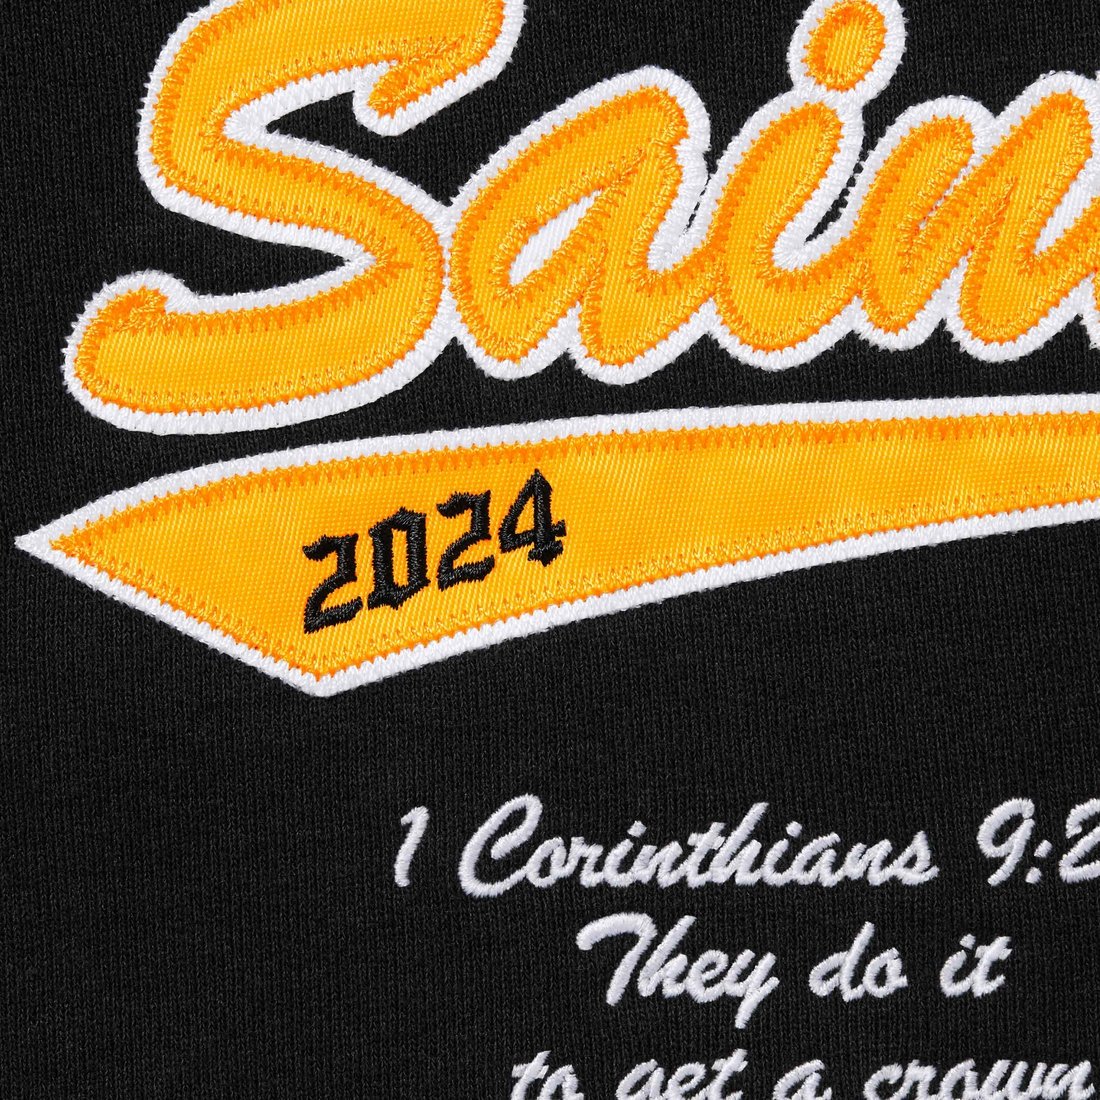 Details on Salvation Zip Up Hooded Sweatshirt Black from spring summer
                                                    2024 (Price is $178)